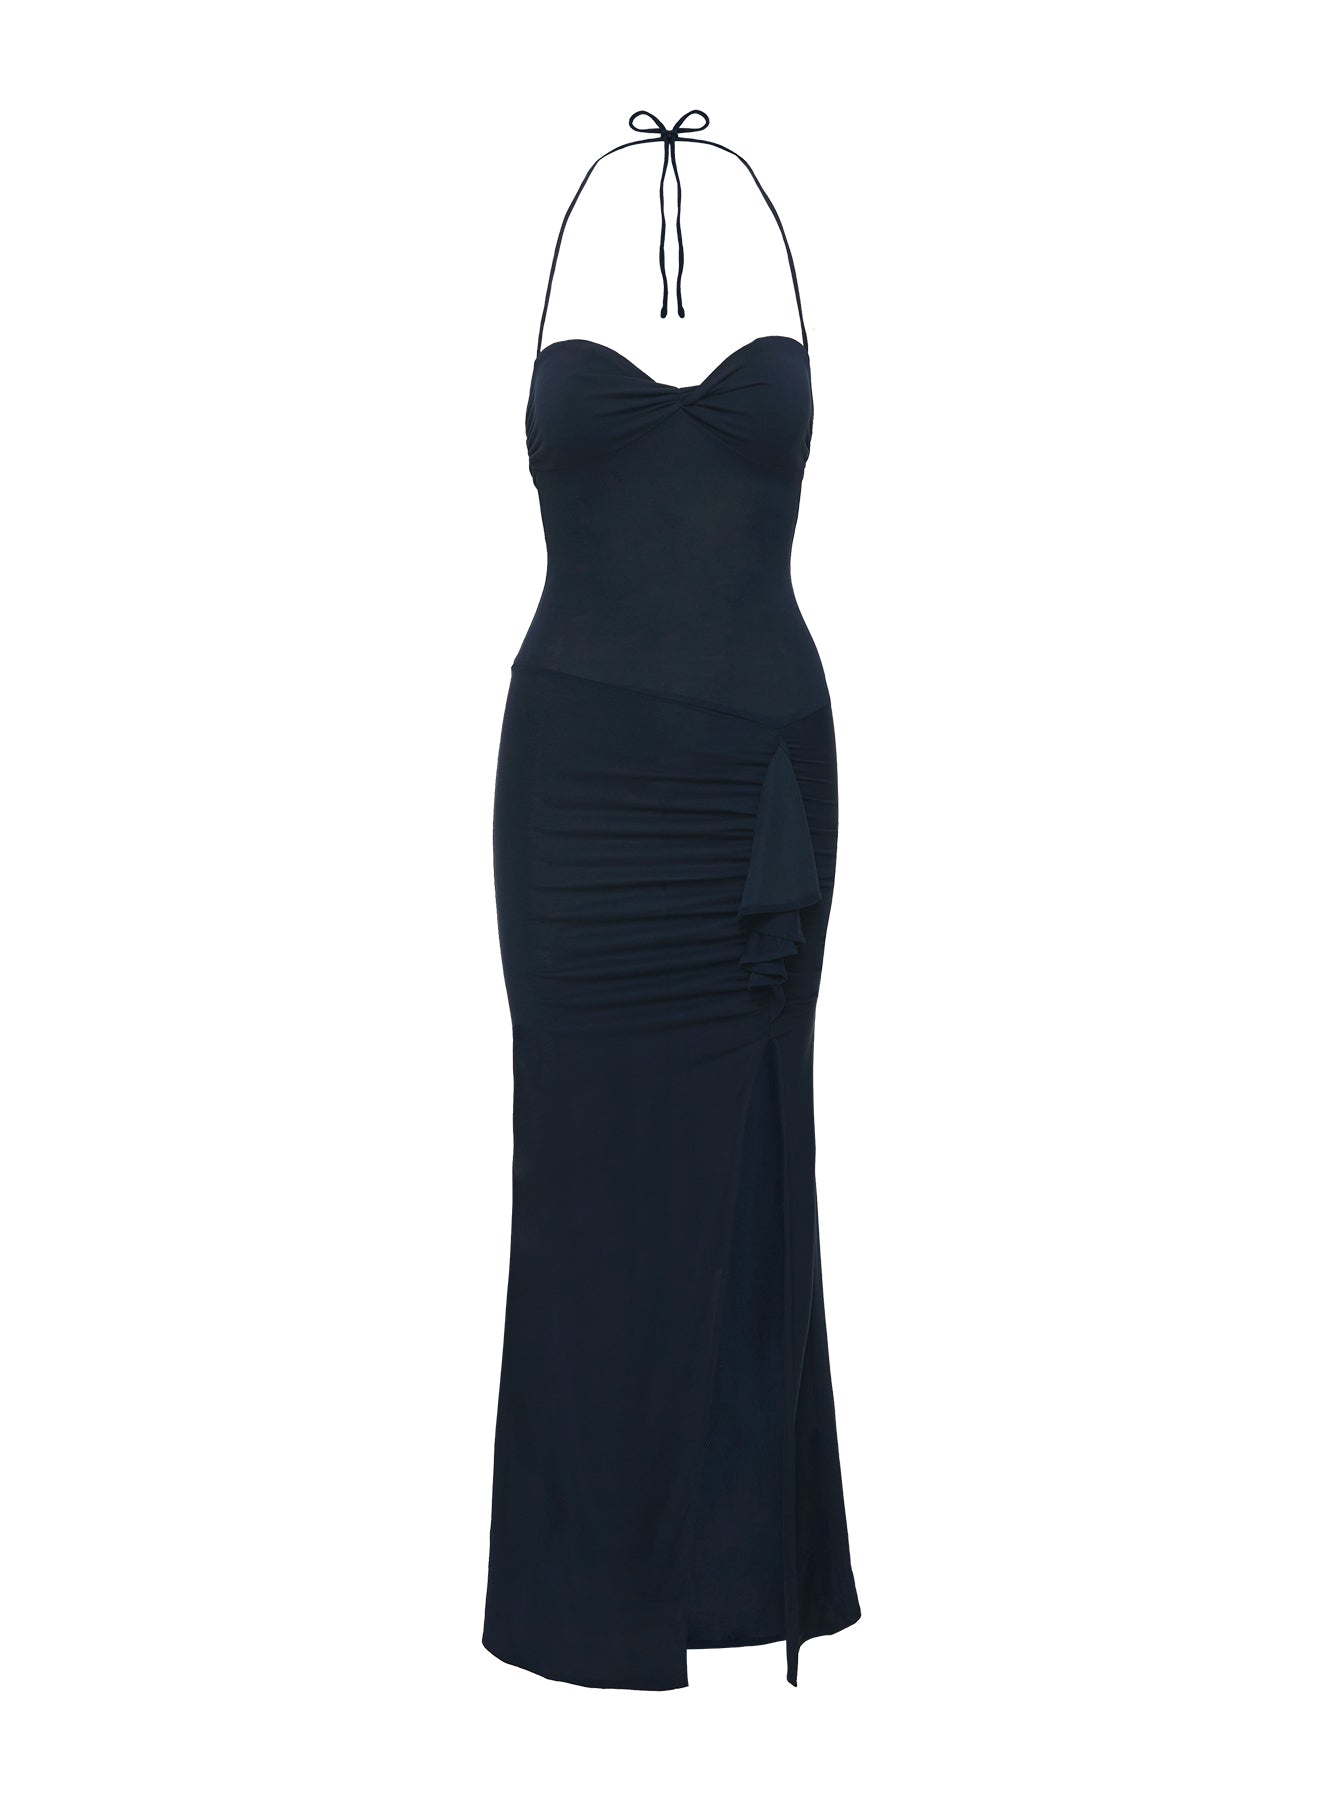 Shop Formal Dress - Destinations Maxi Dress Navy Curve third image